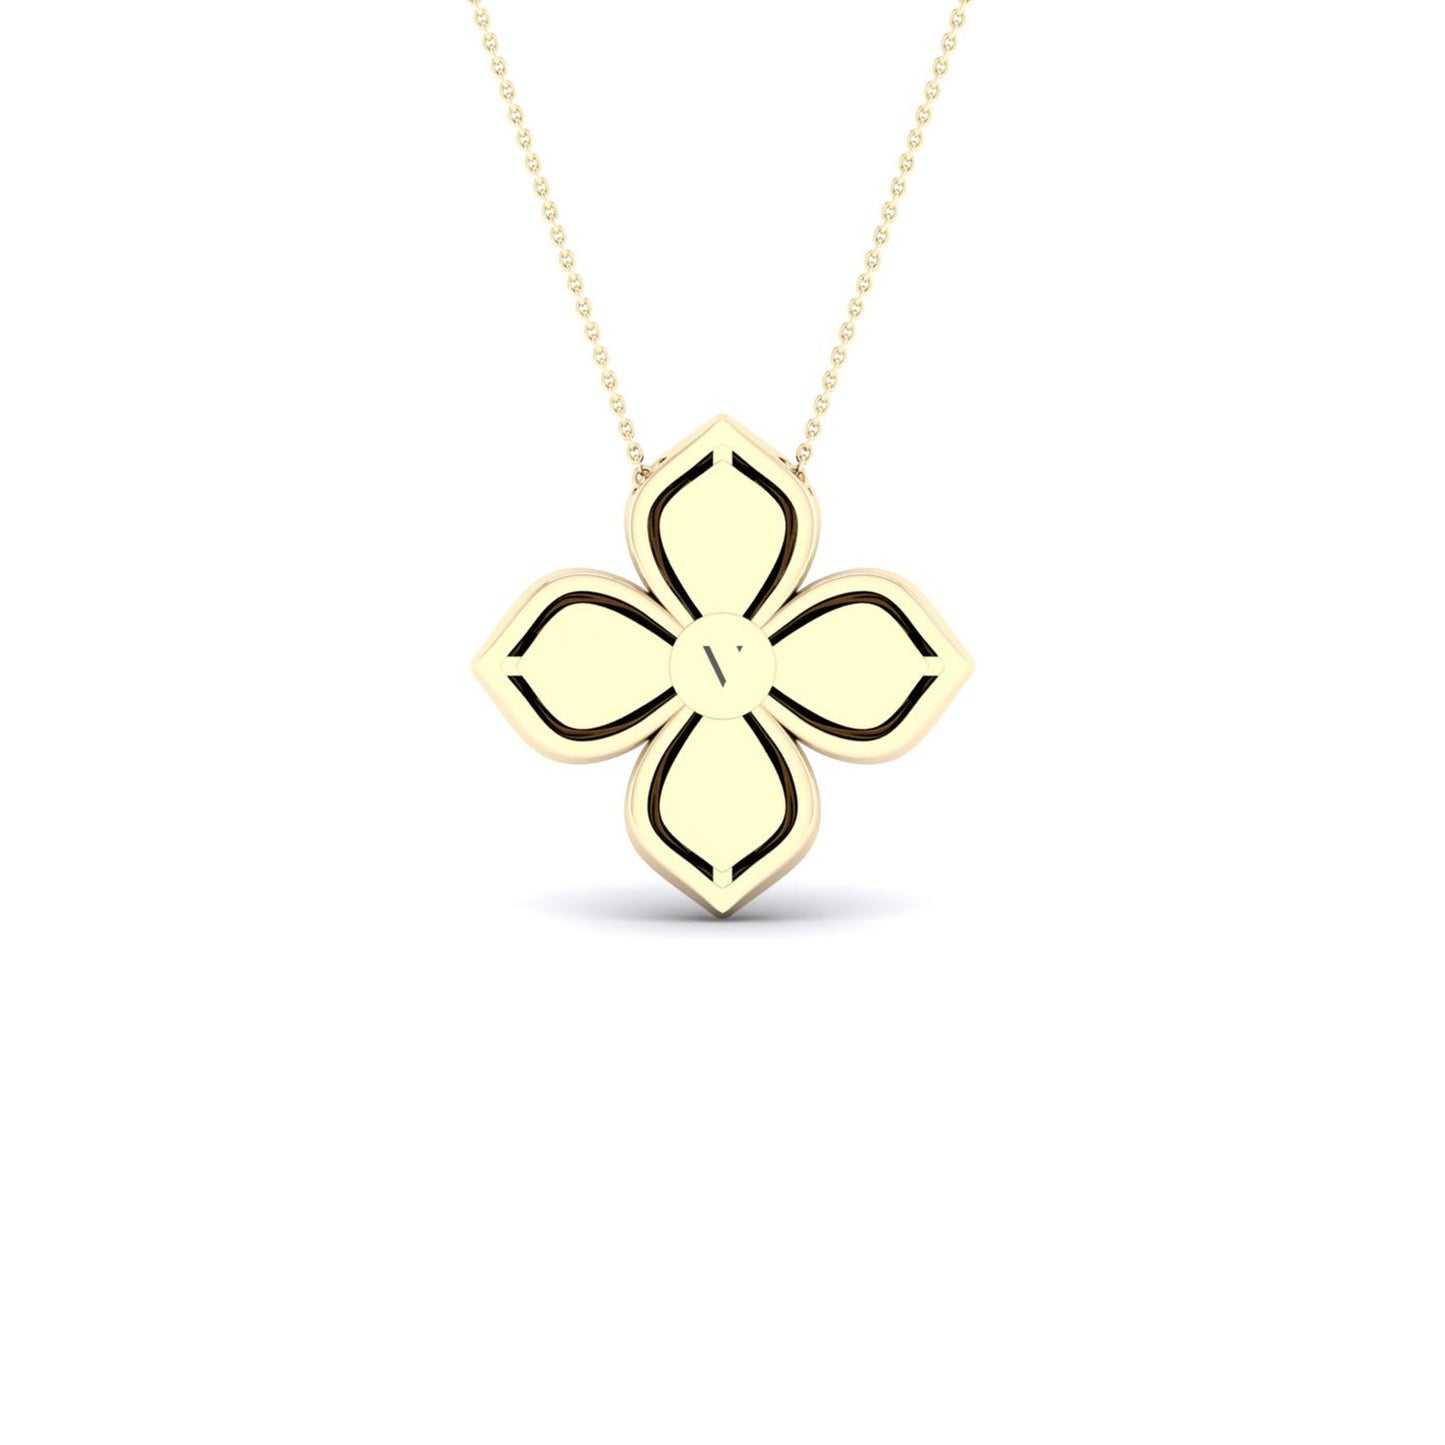 La Fleur Diamond Necklace_Product angle_1/2 Ct. - 3